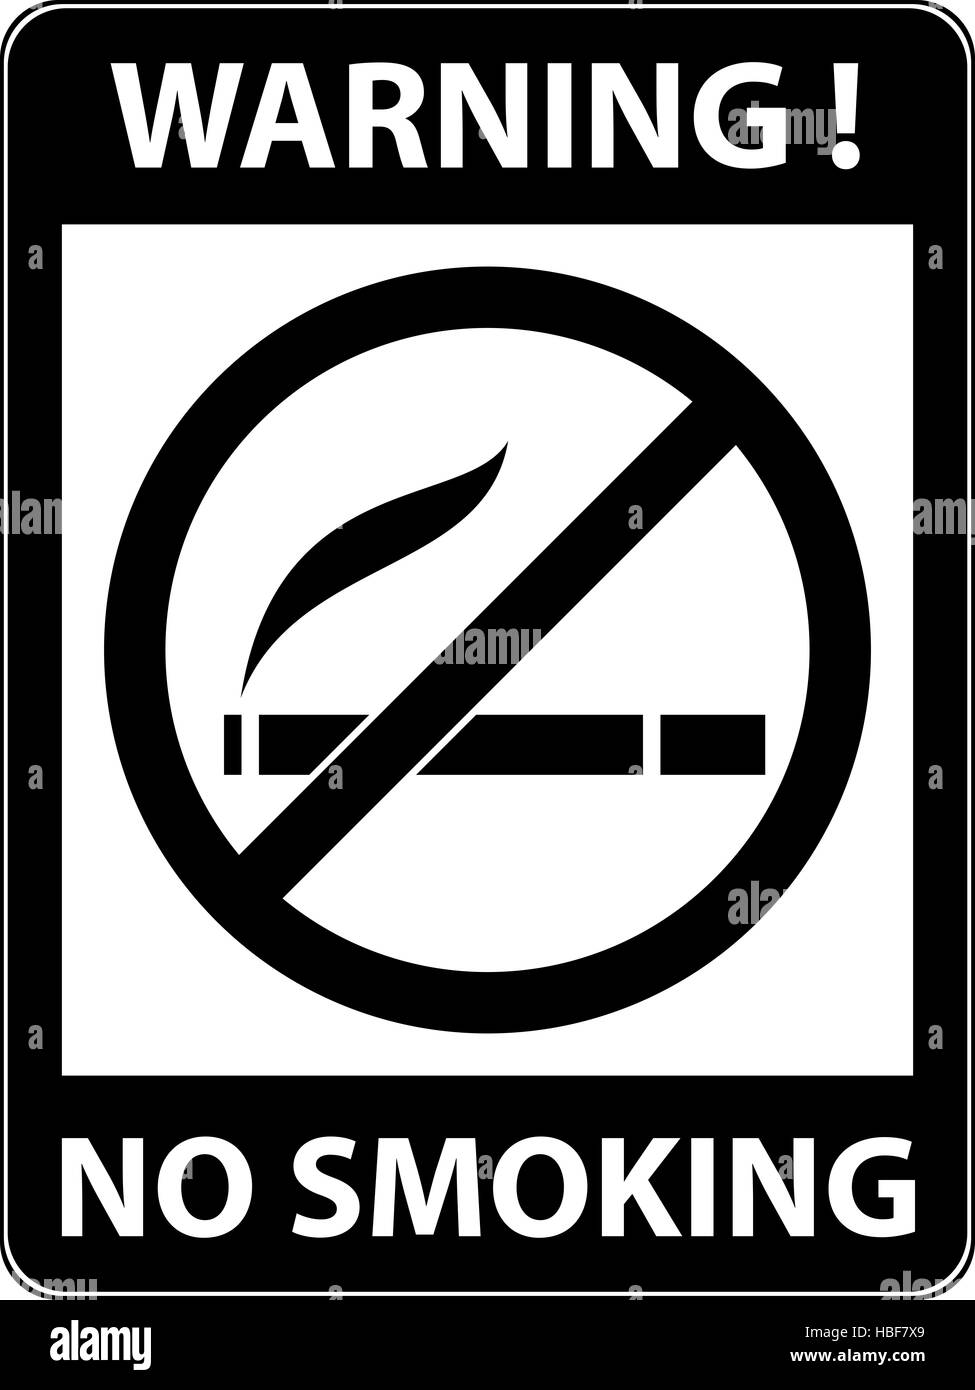 No smoking, cigarette prohibited symbol. Stock Photo